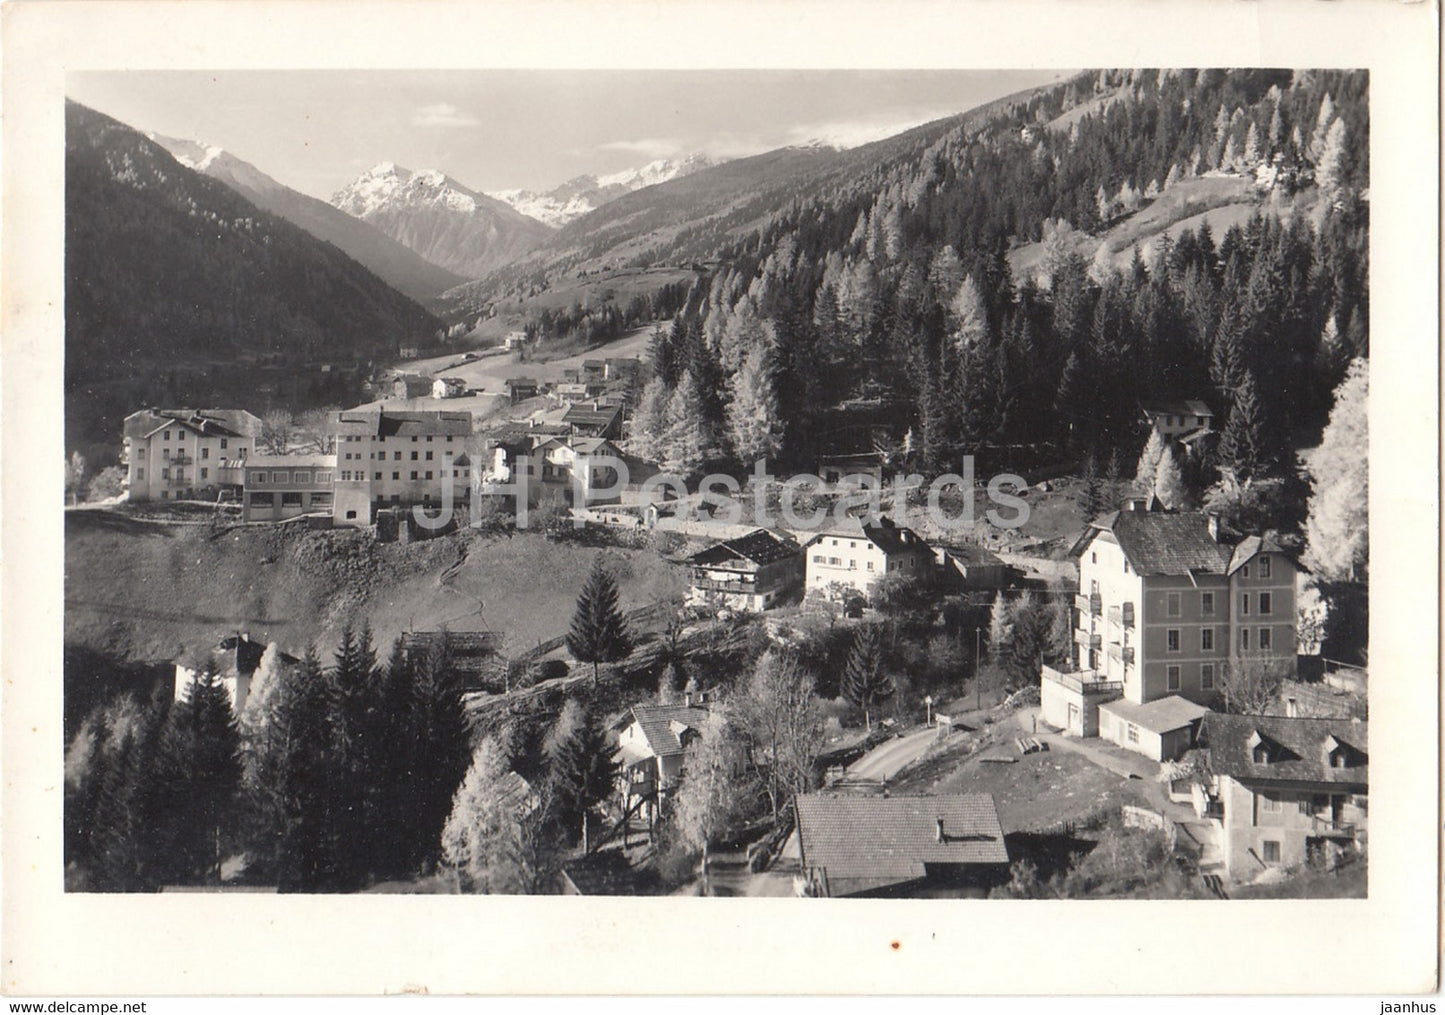 S Valpurga 1192 m - Val d'Ultimo - St Walburg - Ultental - 1963 - Italy - used - JH Postcards